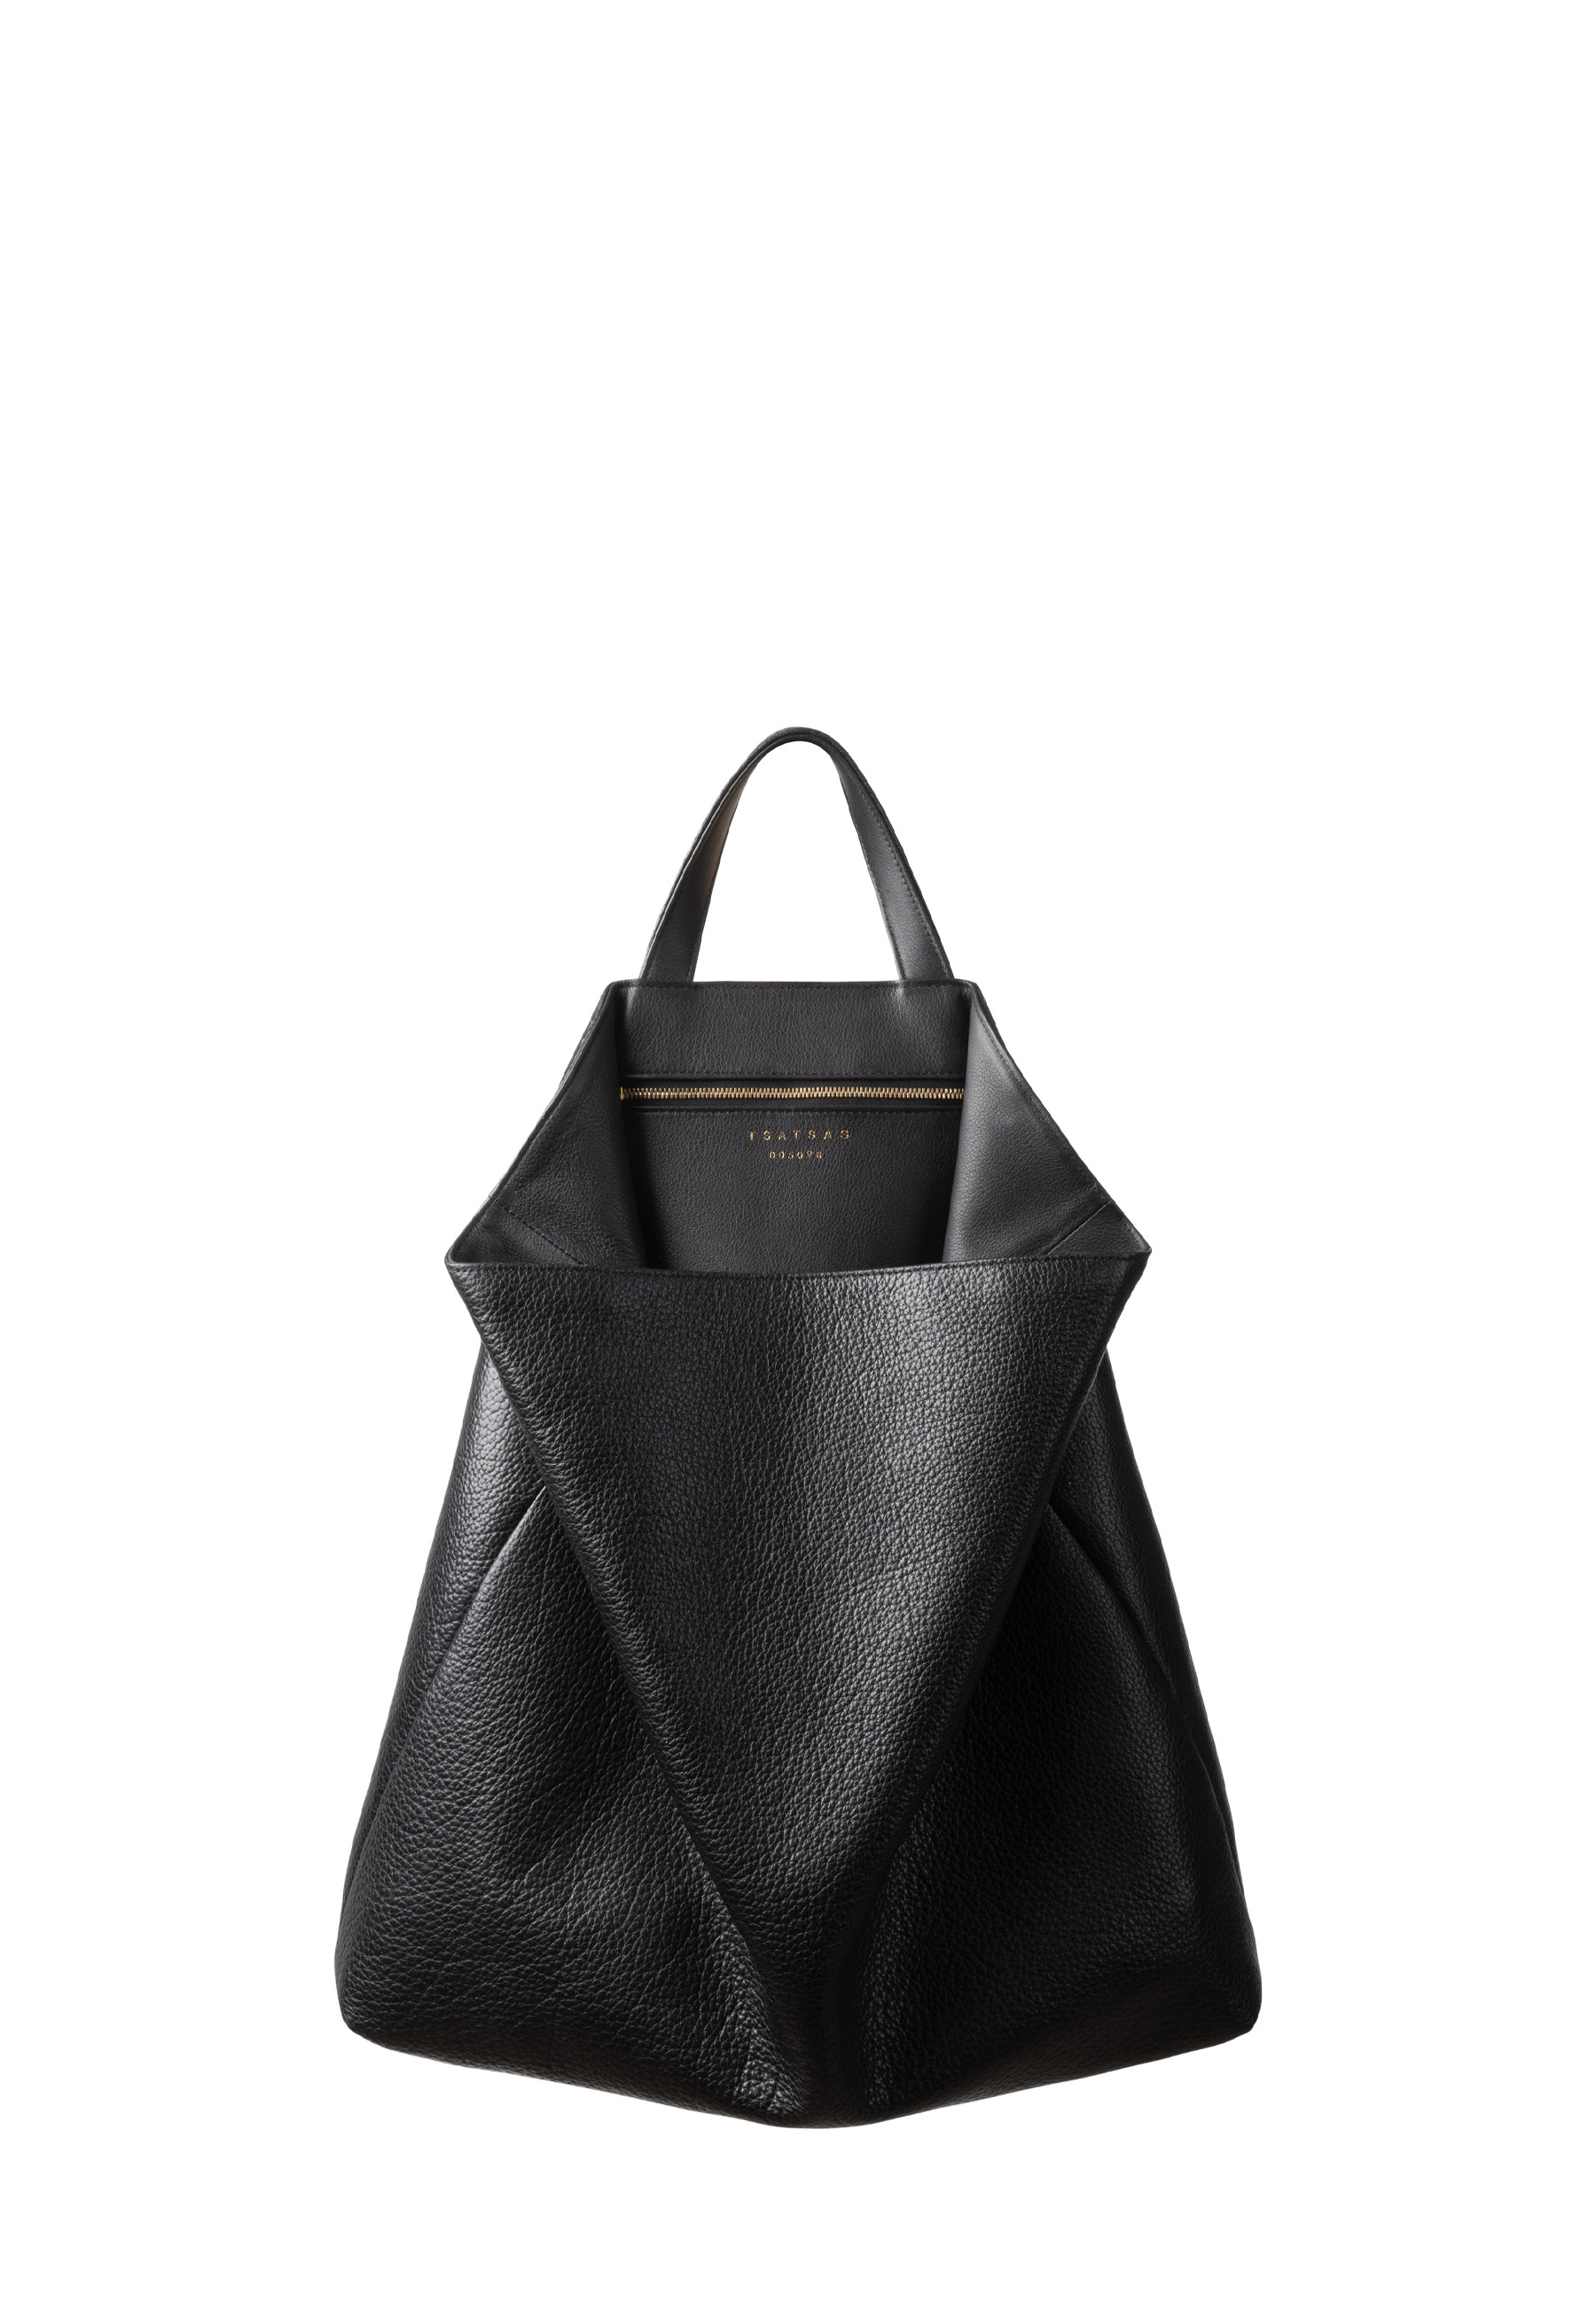 FLUKE tote bag in black bison leather | TSATSAS